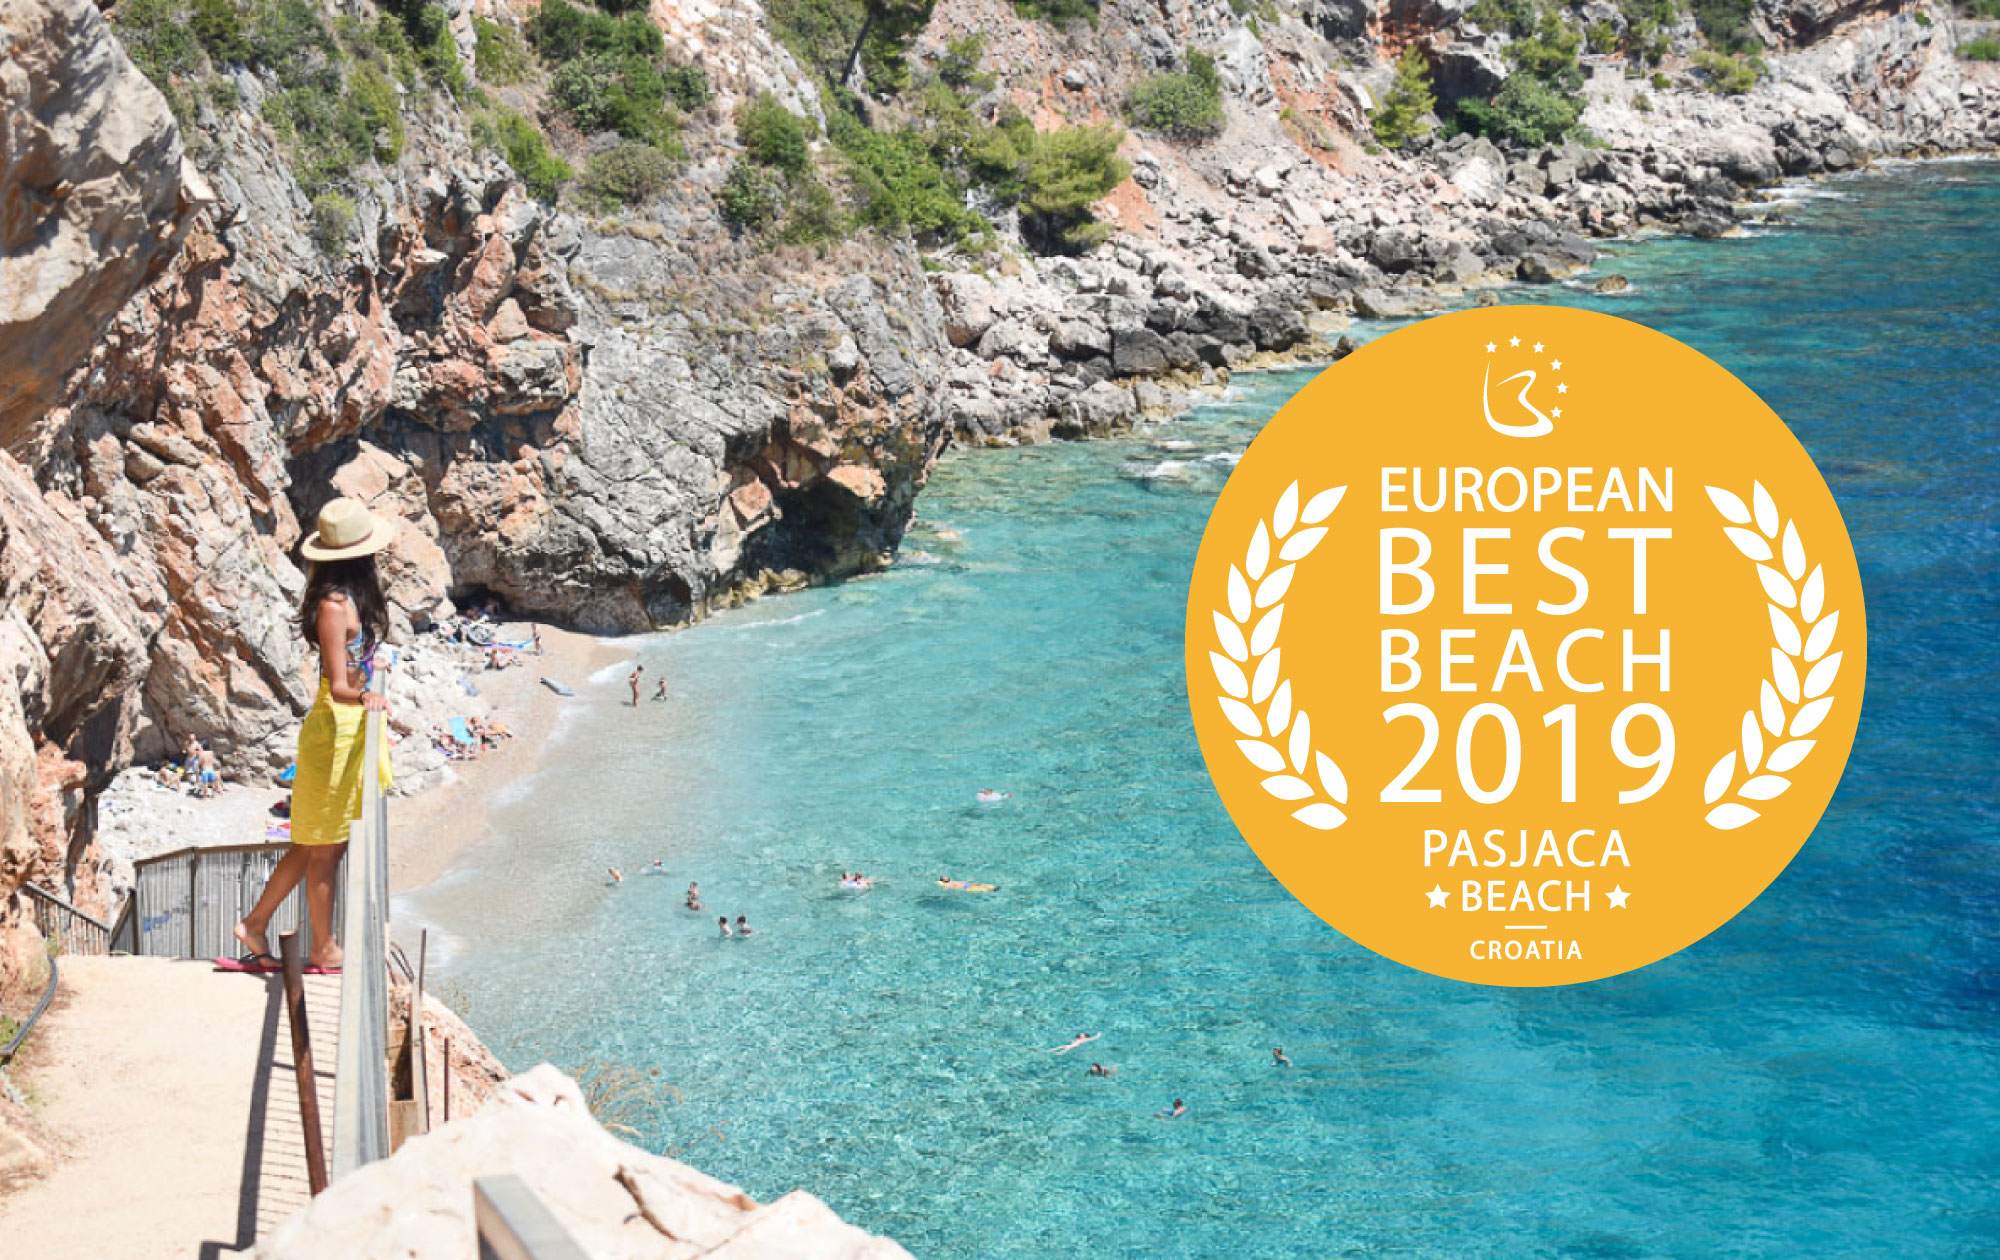 Best beaches in Europe 8 - Europe